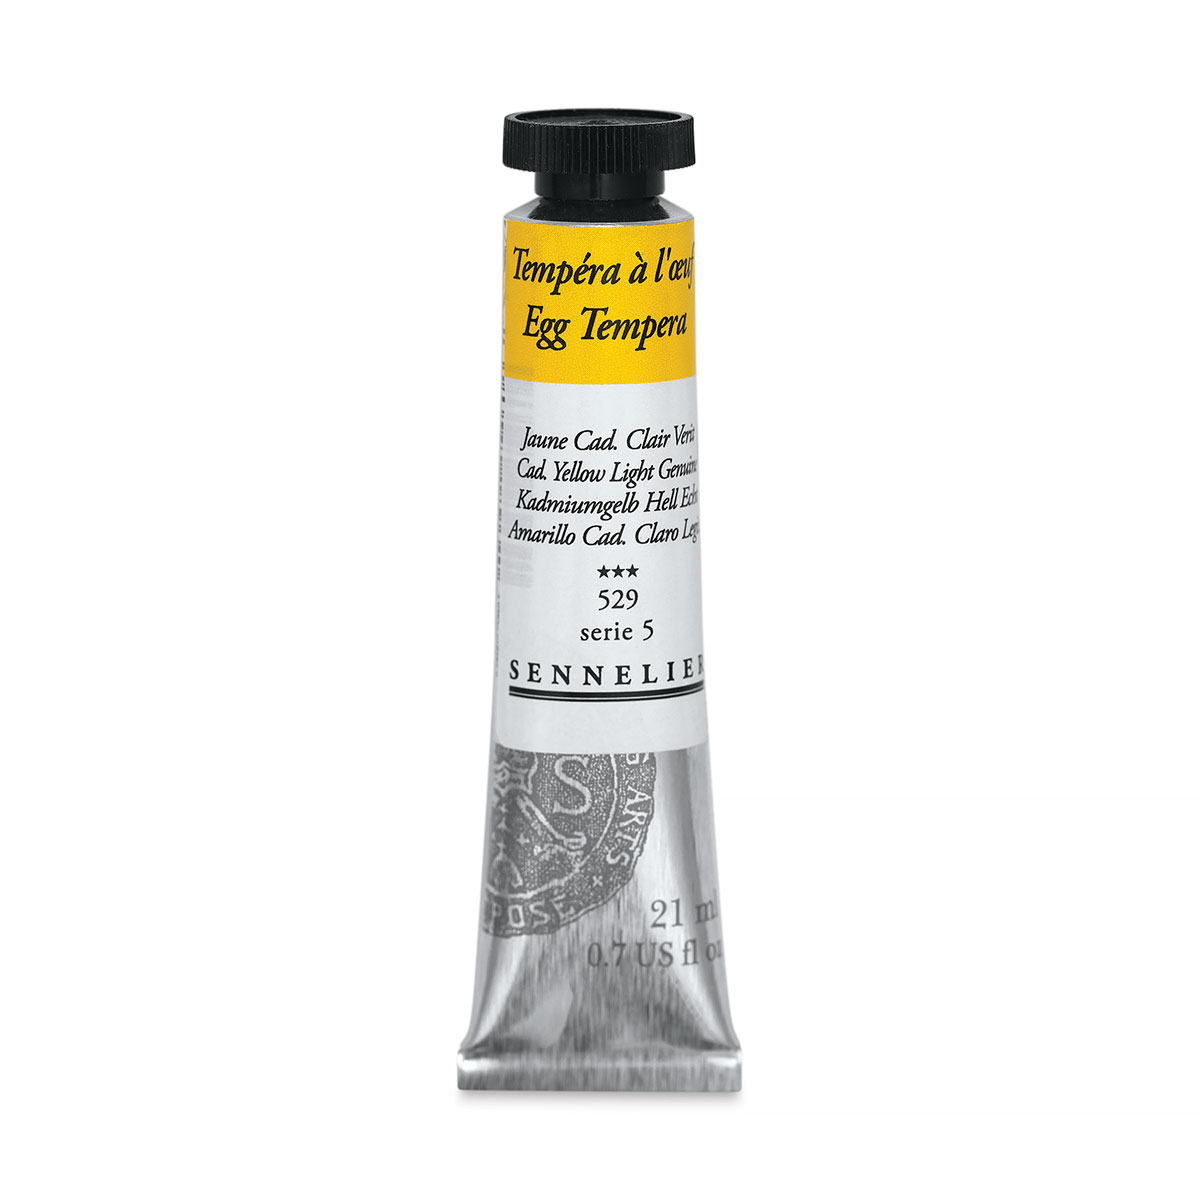 Sennelier Artists Egg Tempera - Cadmium Yellow Light Genuine, 21 ml tube